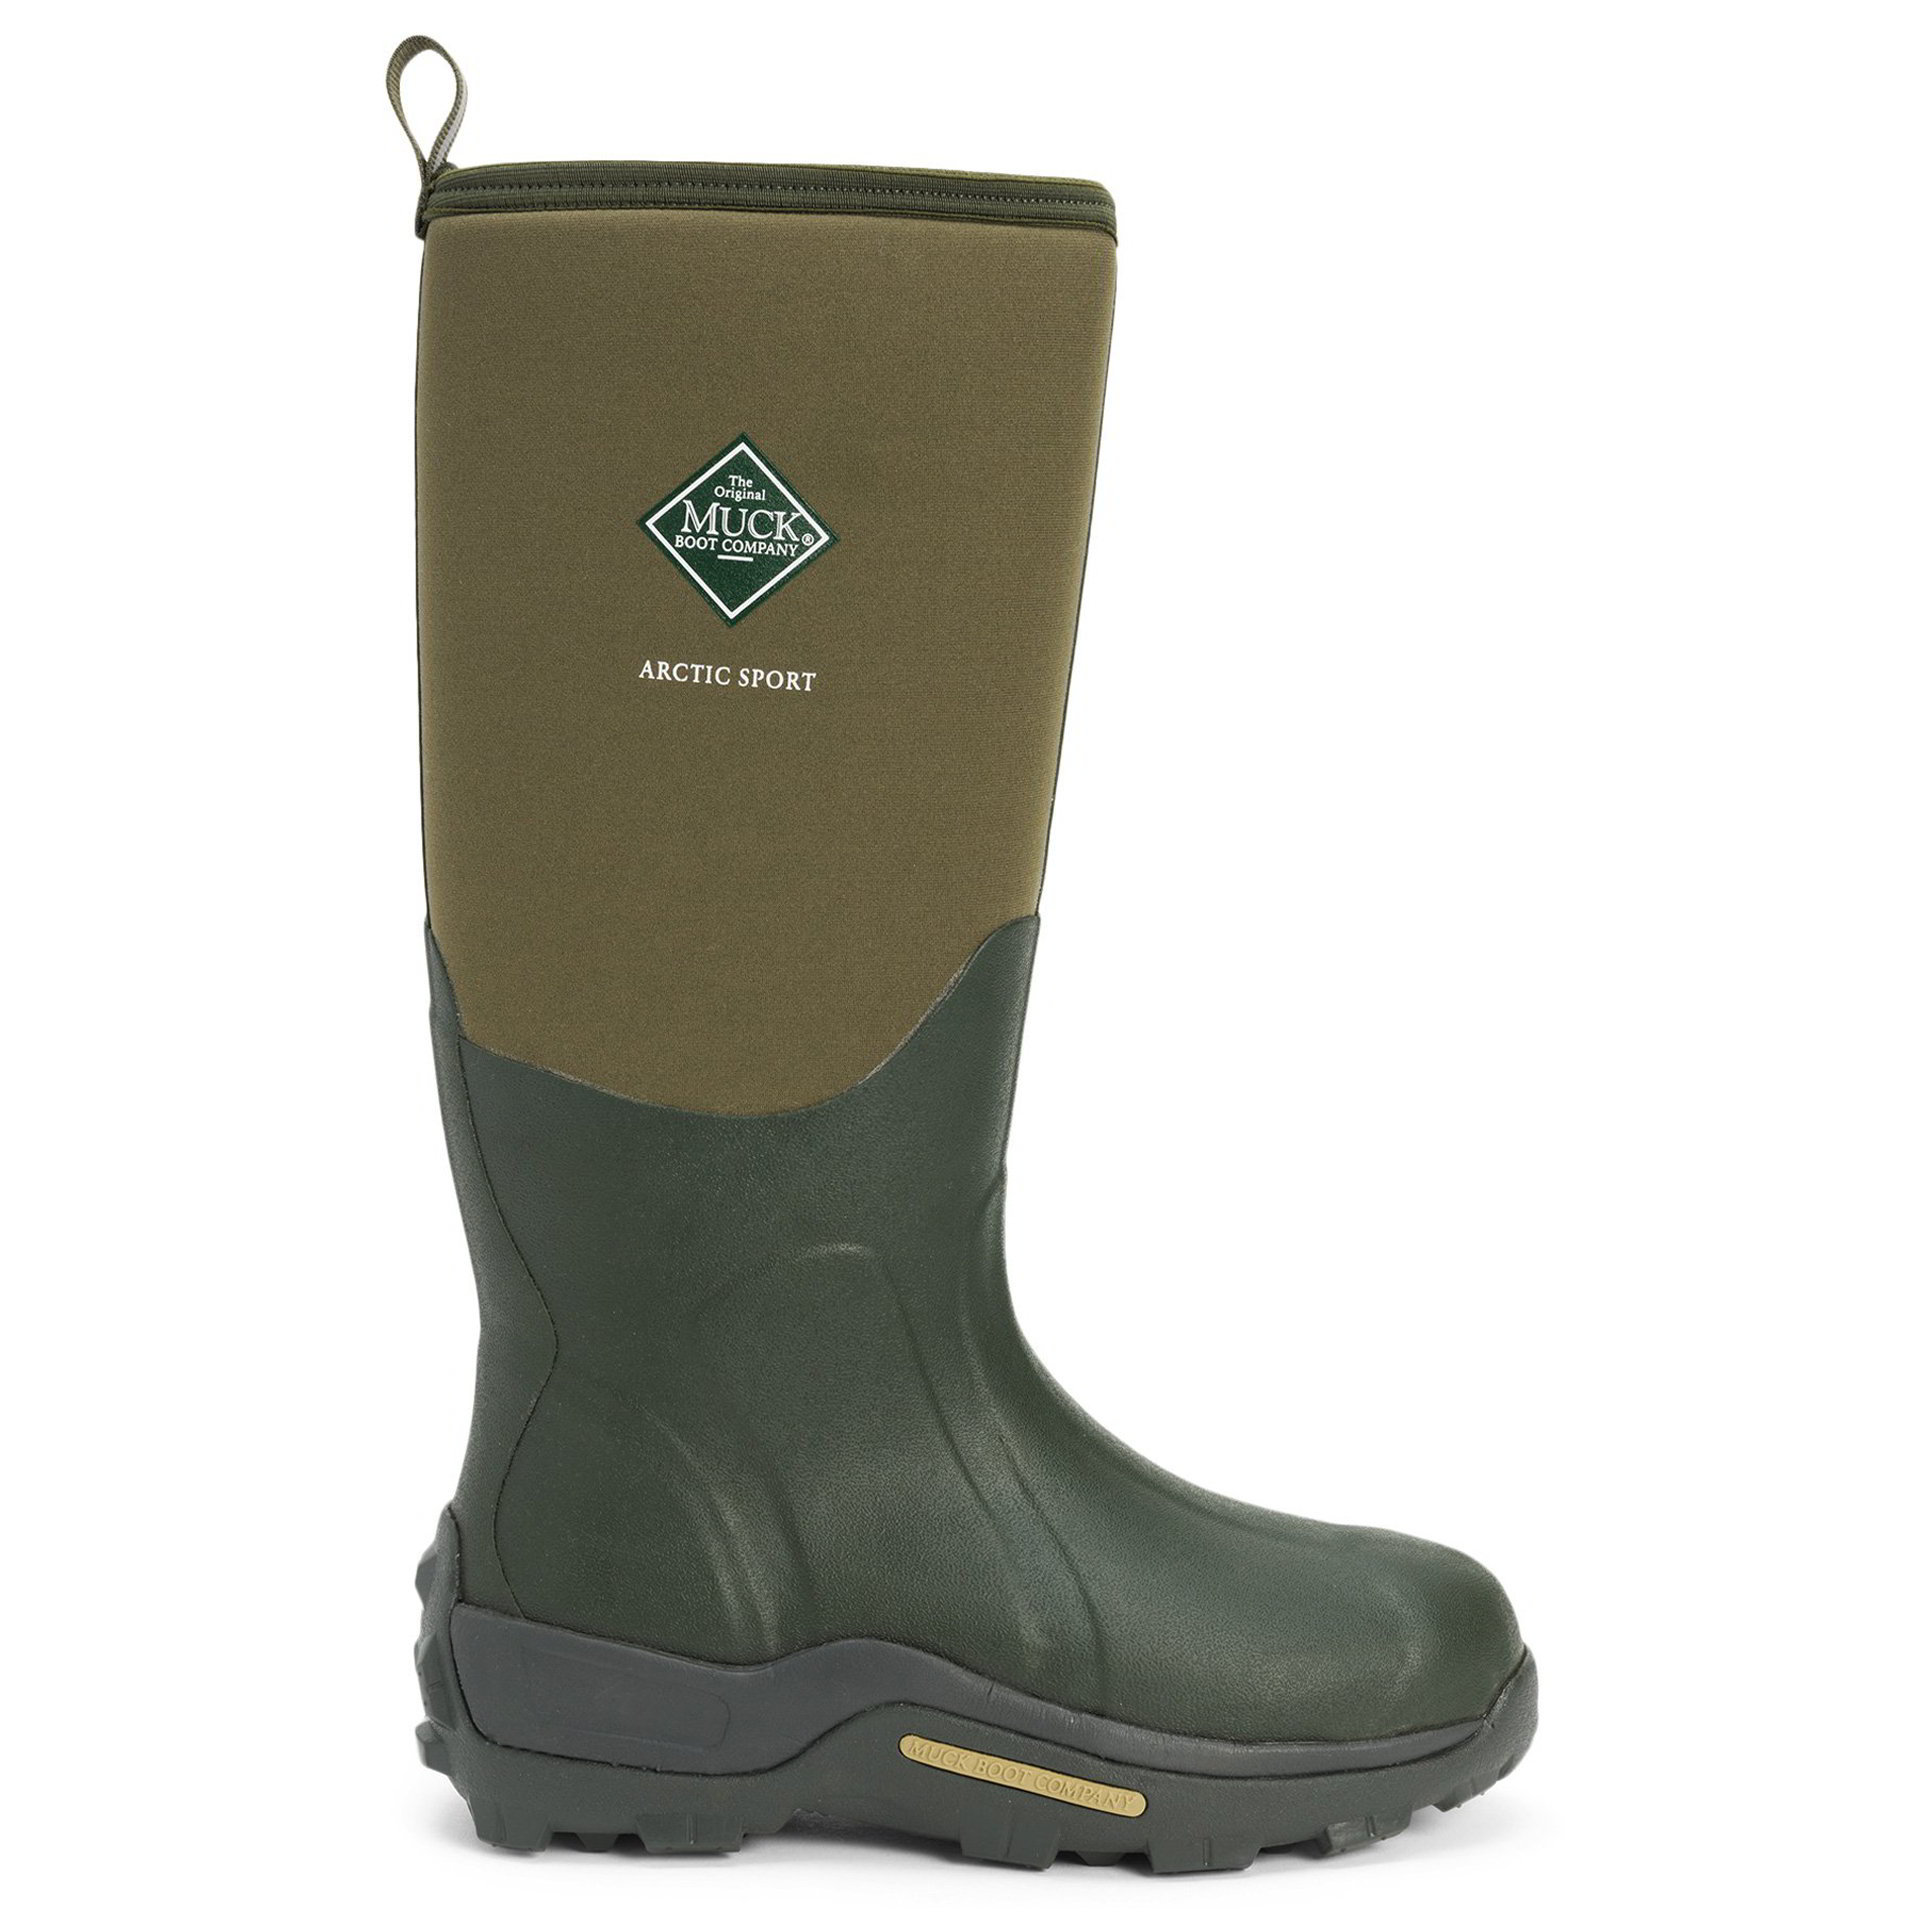 Muck Boots Mens Arctic Sport Waterproof - Moss 2951